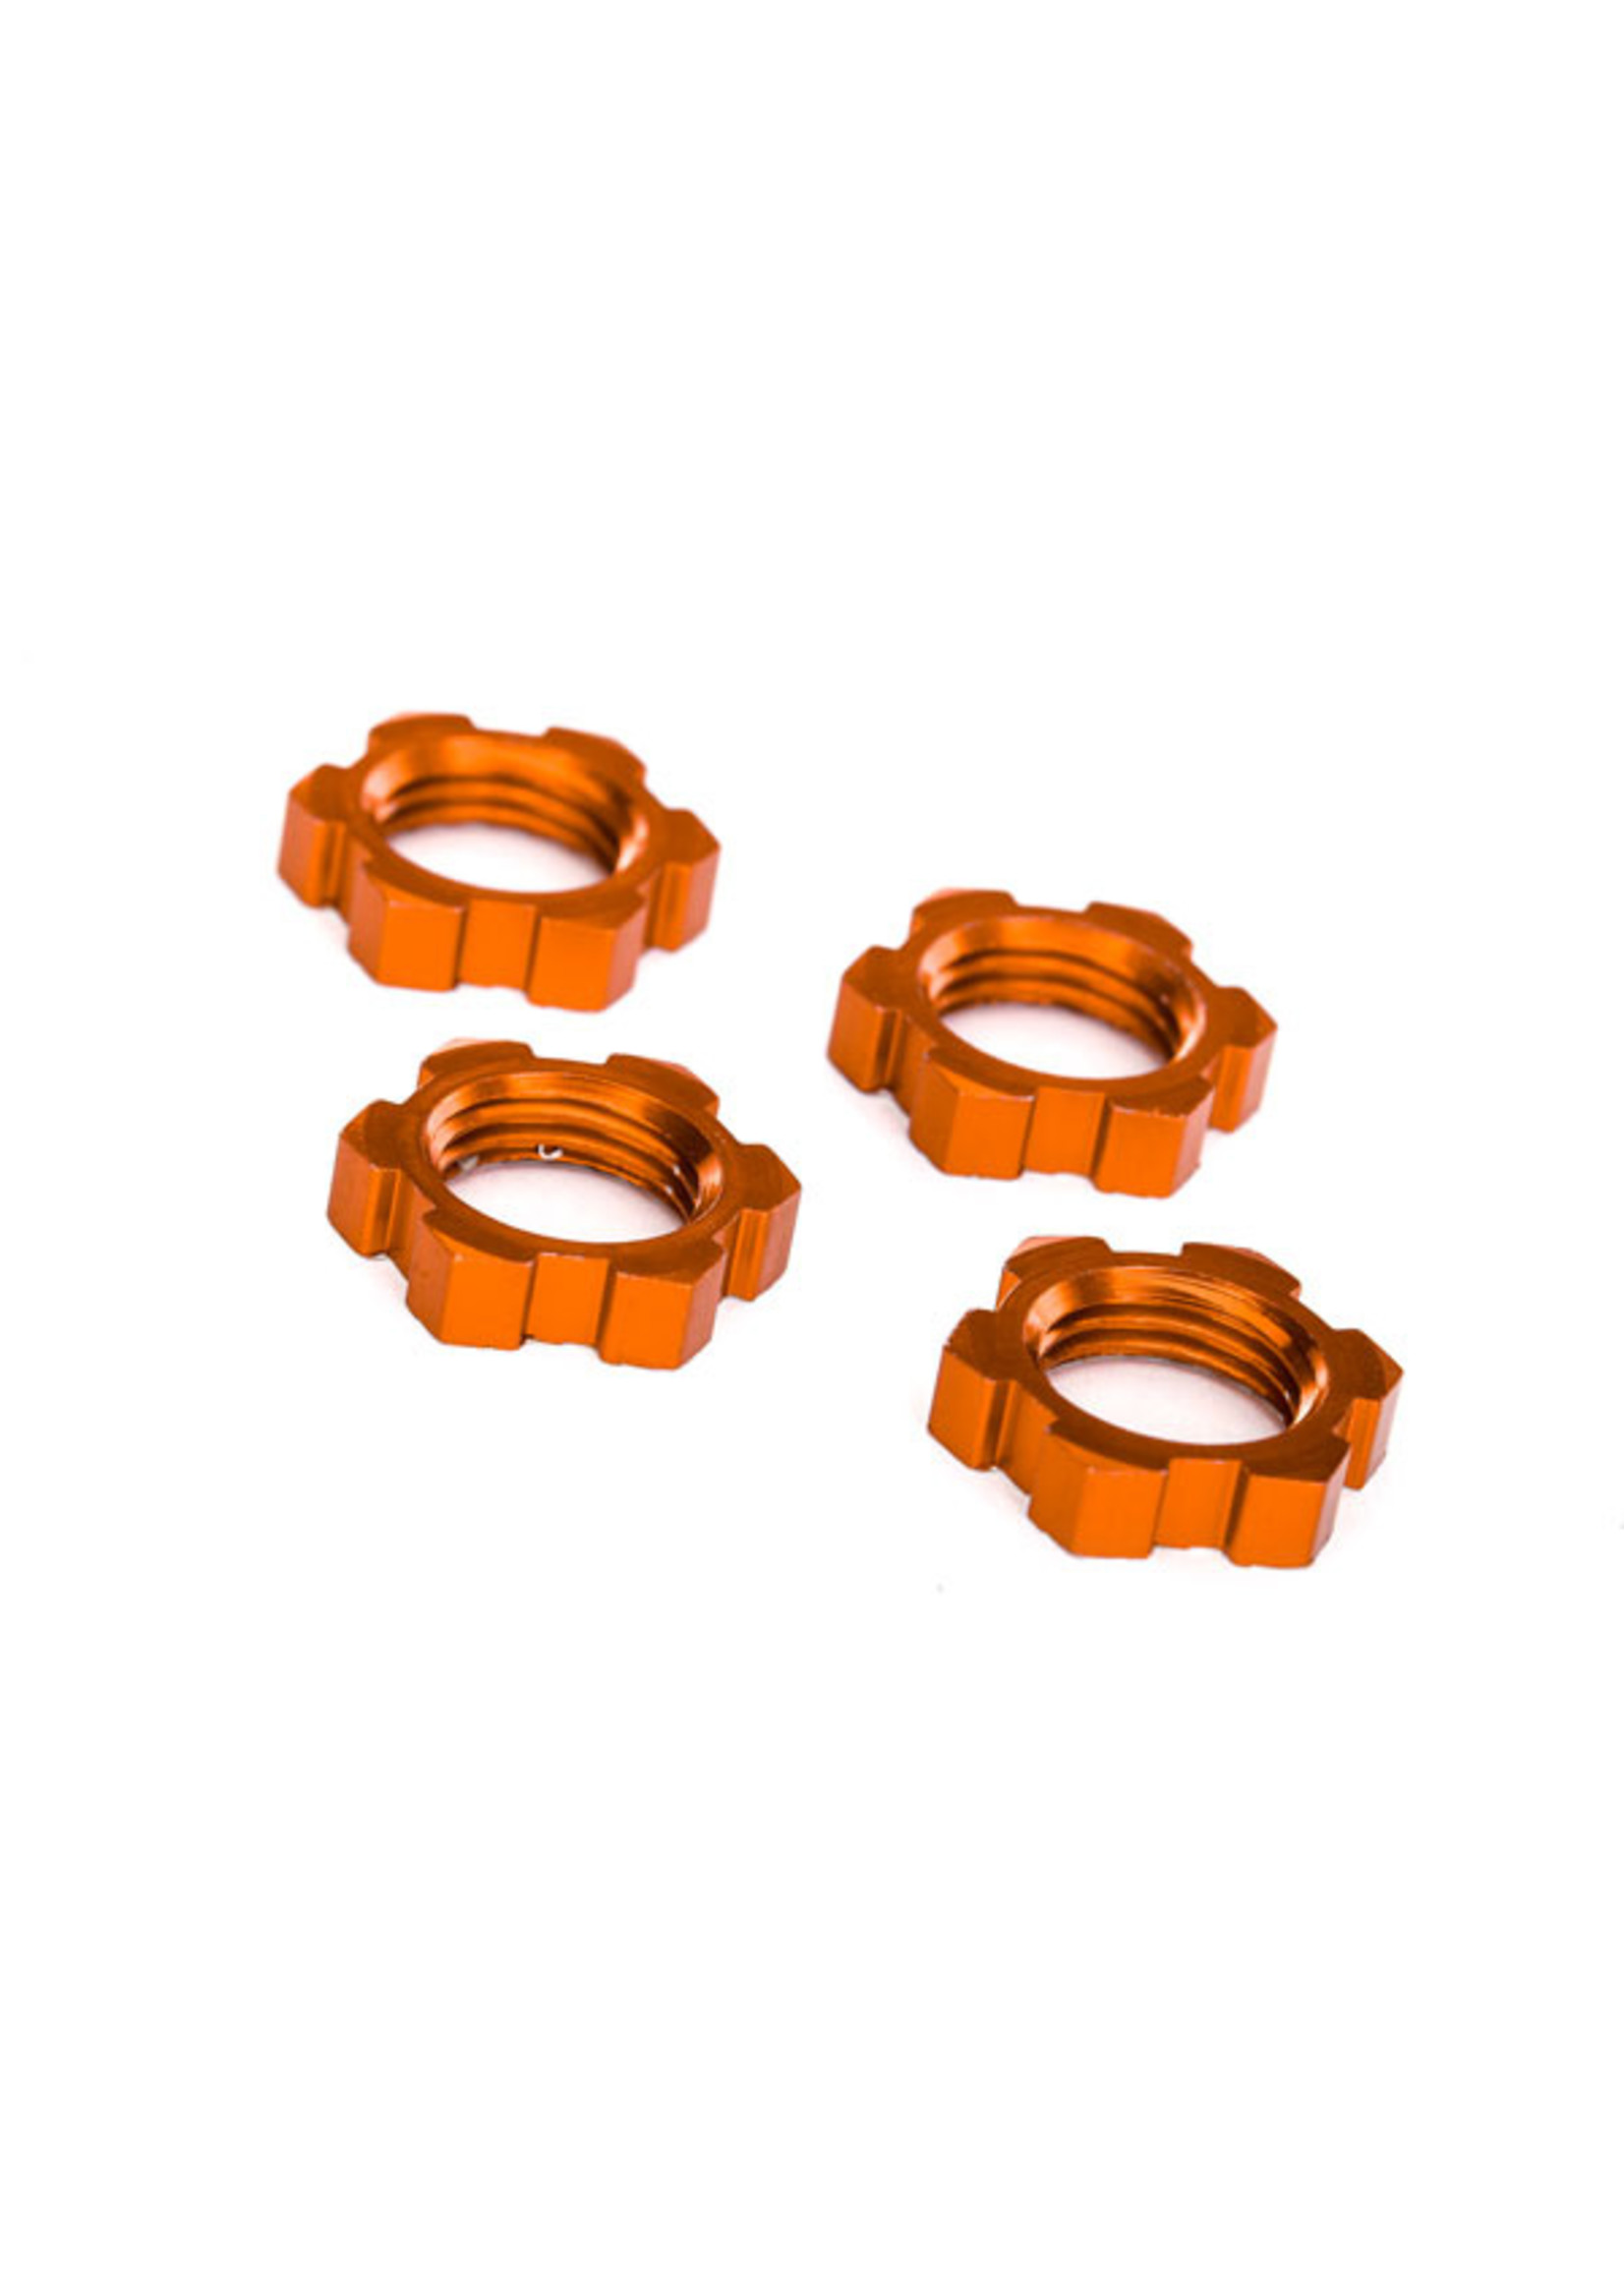 Traxxas 7758T - X-Maxx Wheel Nuts Splined 17mm - Orange